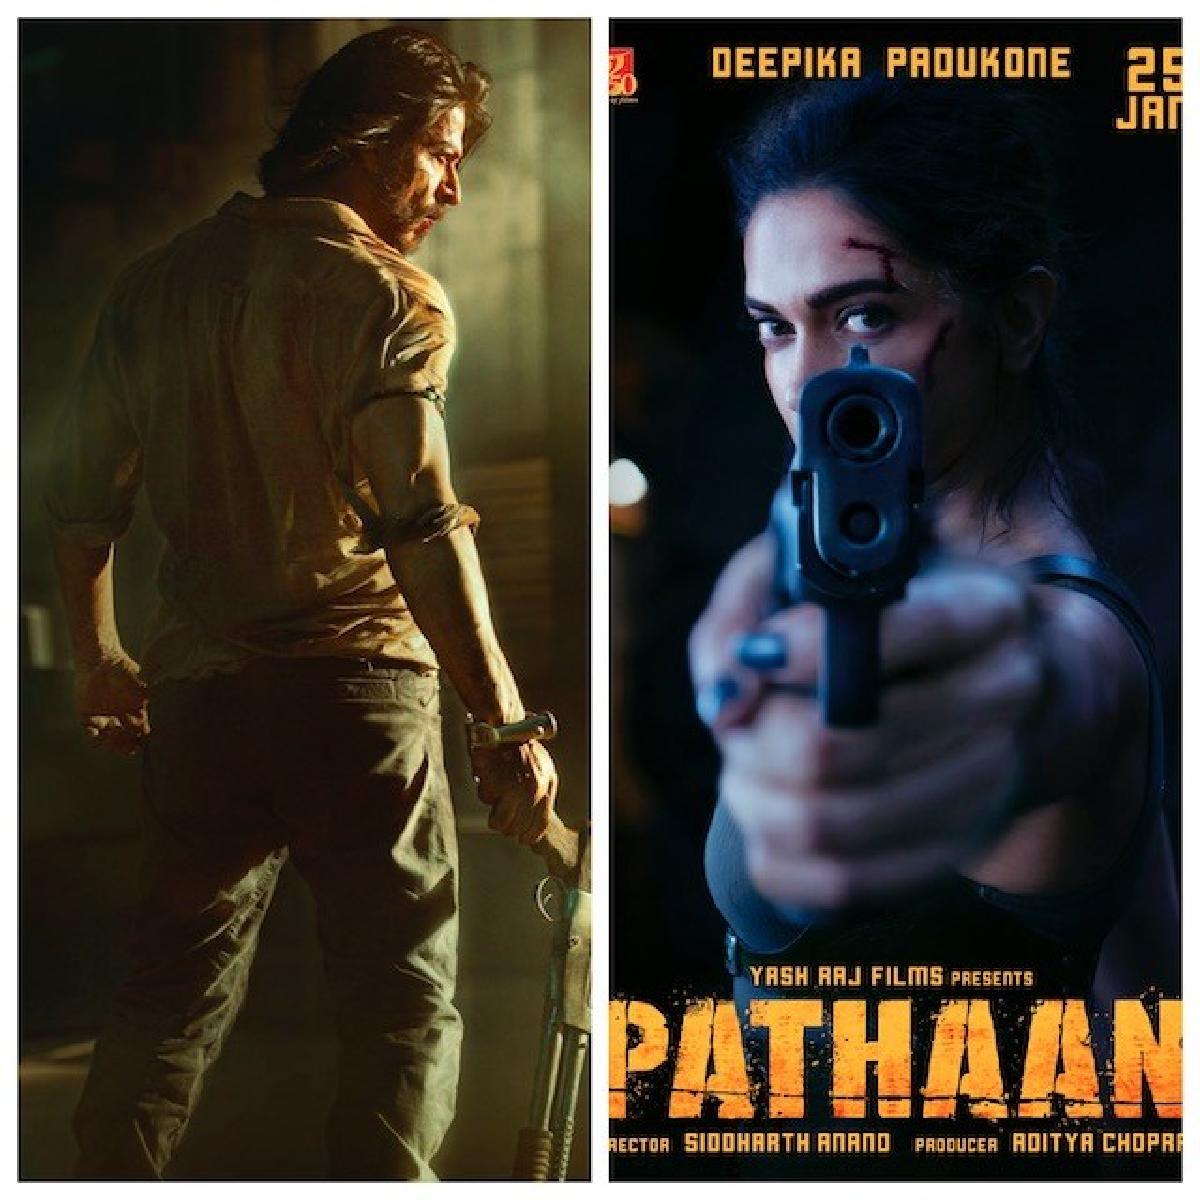 Shah Rukh Khan Introduces Deepika Padukone’s Character From Pathaan